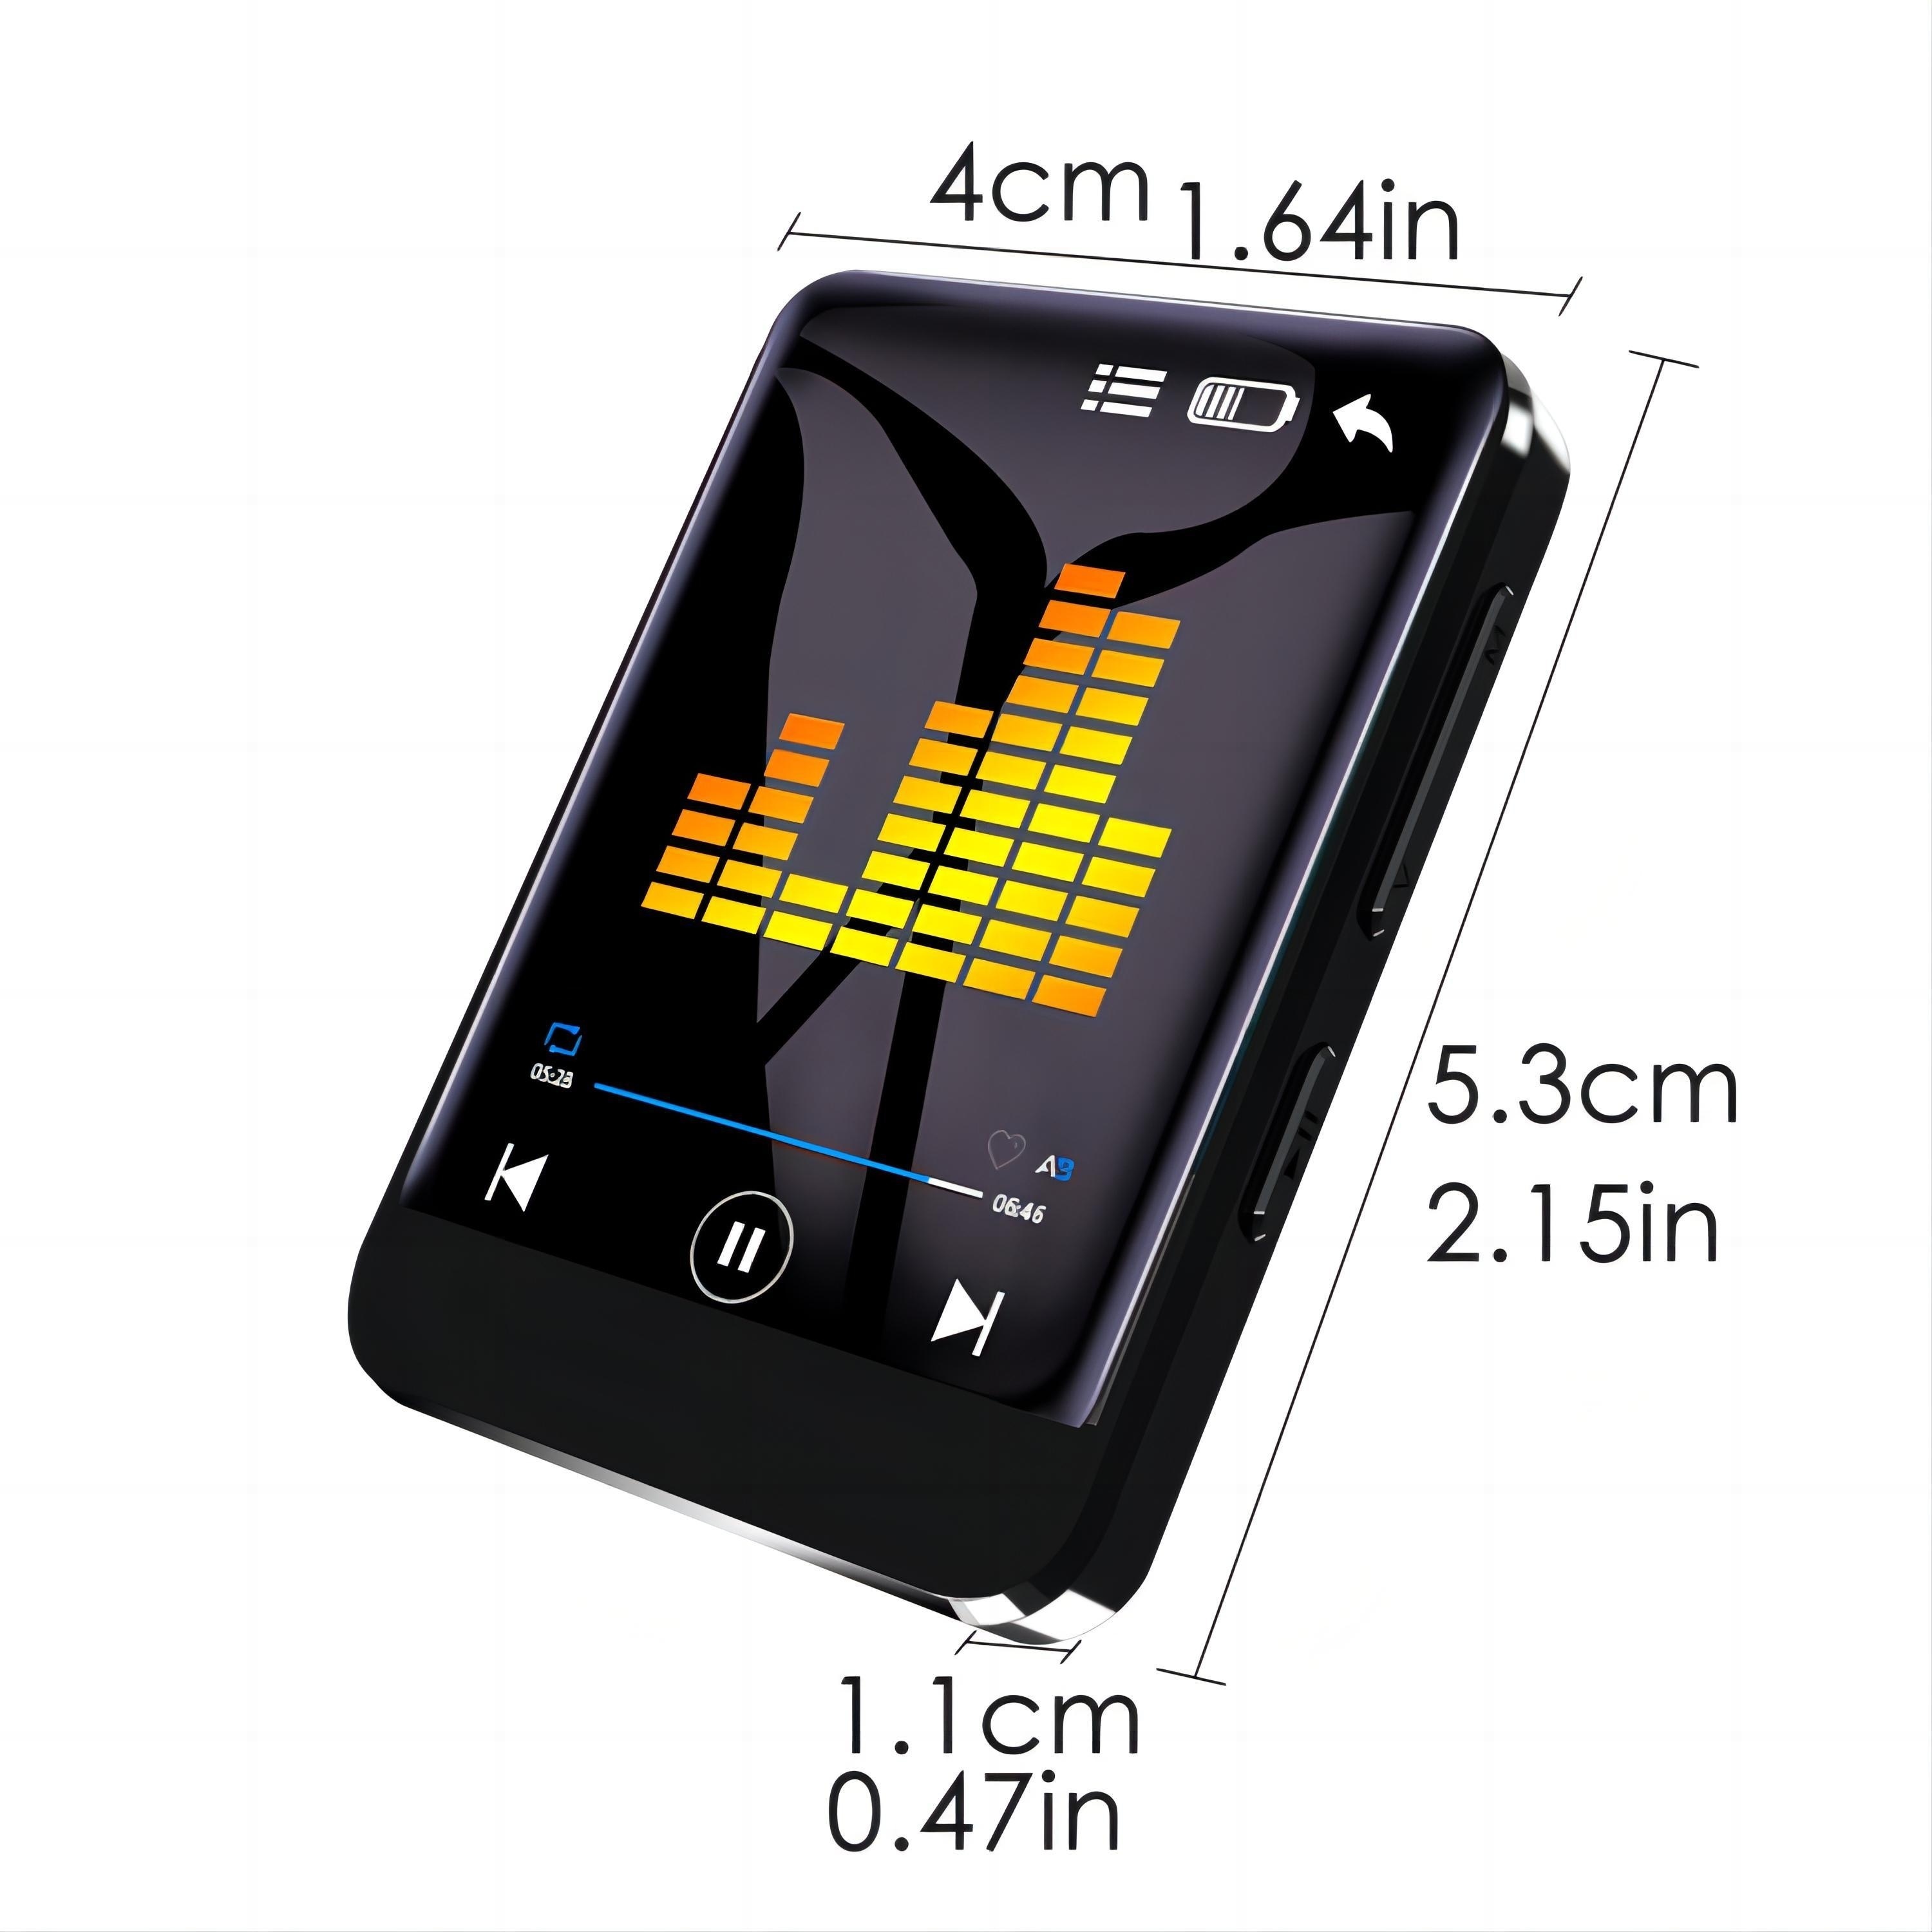 Bluetooth WIFI MP4/MP3 Lossless Music Player Radio Recorder Sport